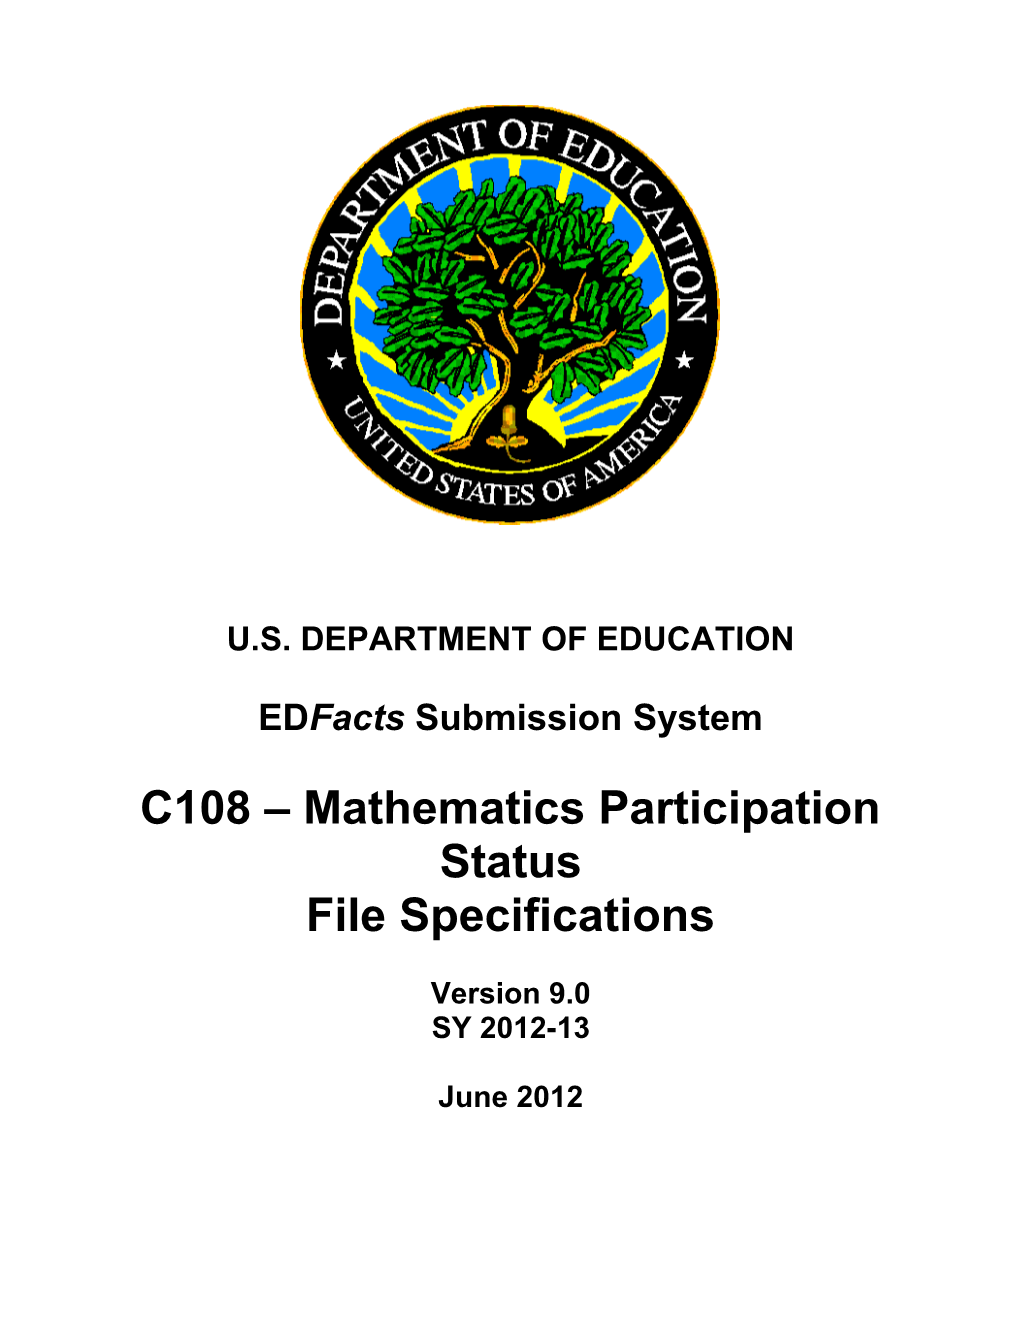 Mathematics Participation Status File Specifications